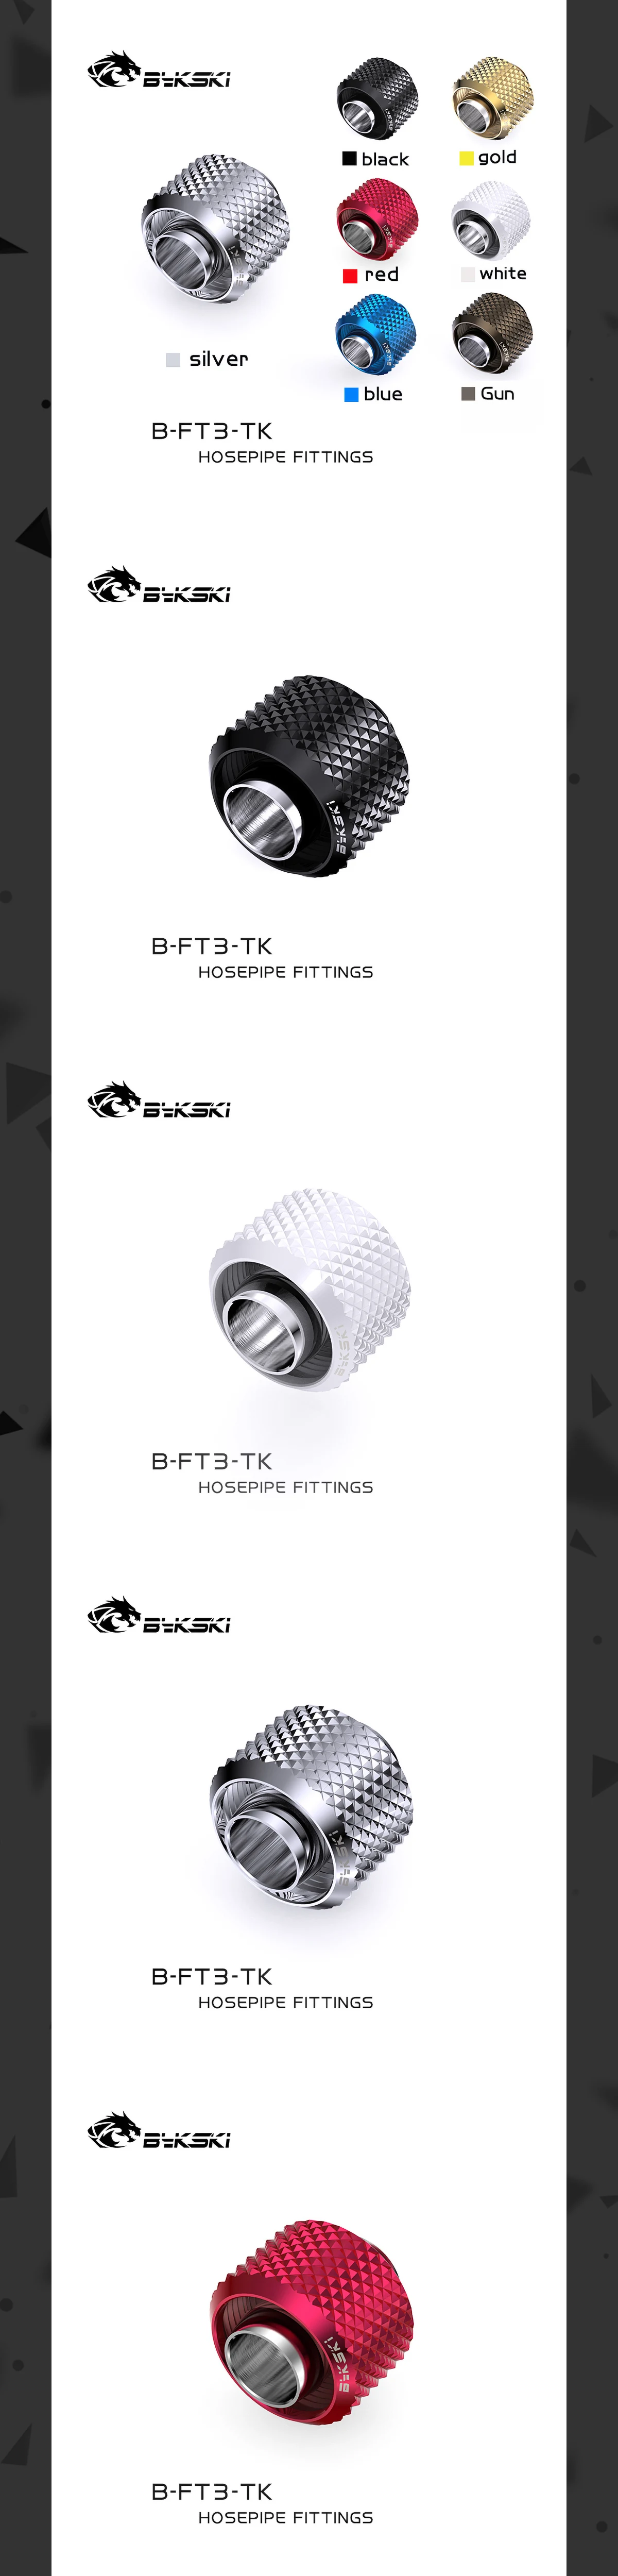 Bykski Soft Tube Fitting For 10x13 10x16 13x19mm , Hose Pipe G1/4" Connector Adapter ,  B-FT3-TN B-FT3-TK B-FT4-TK  